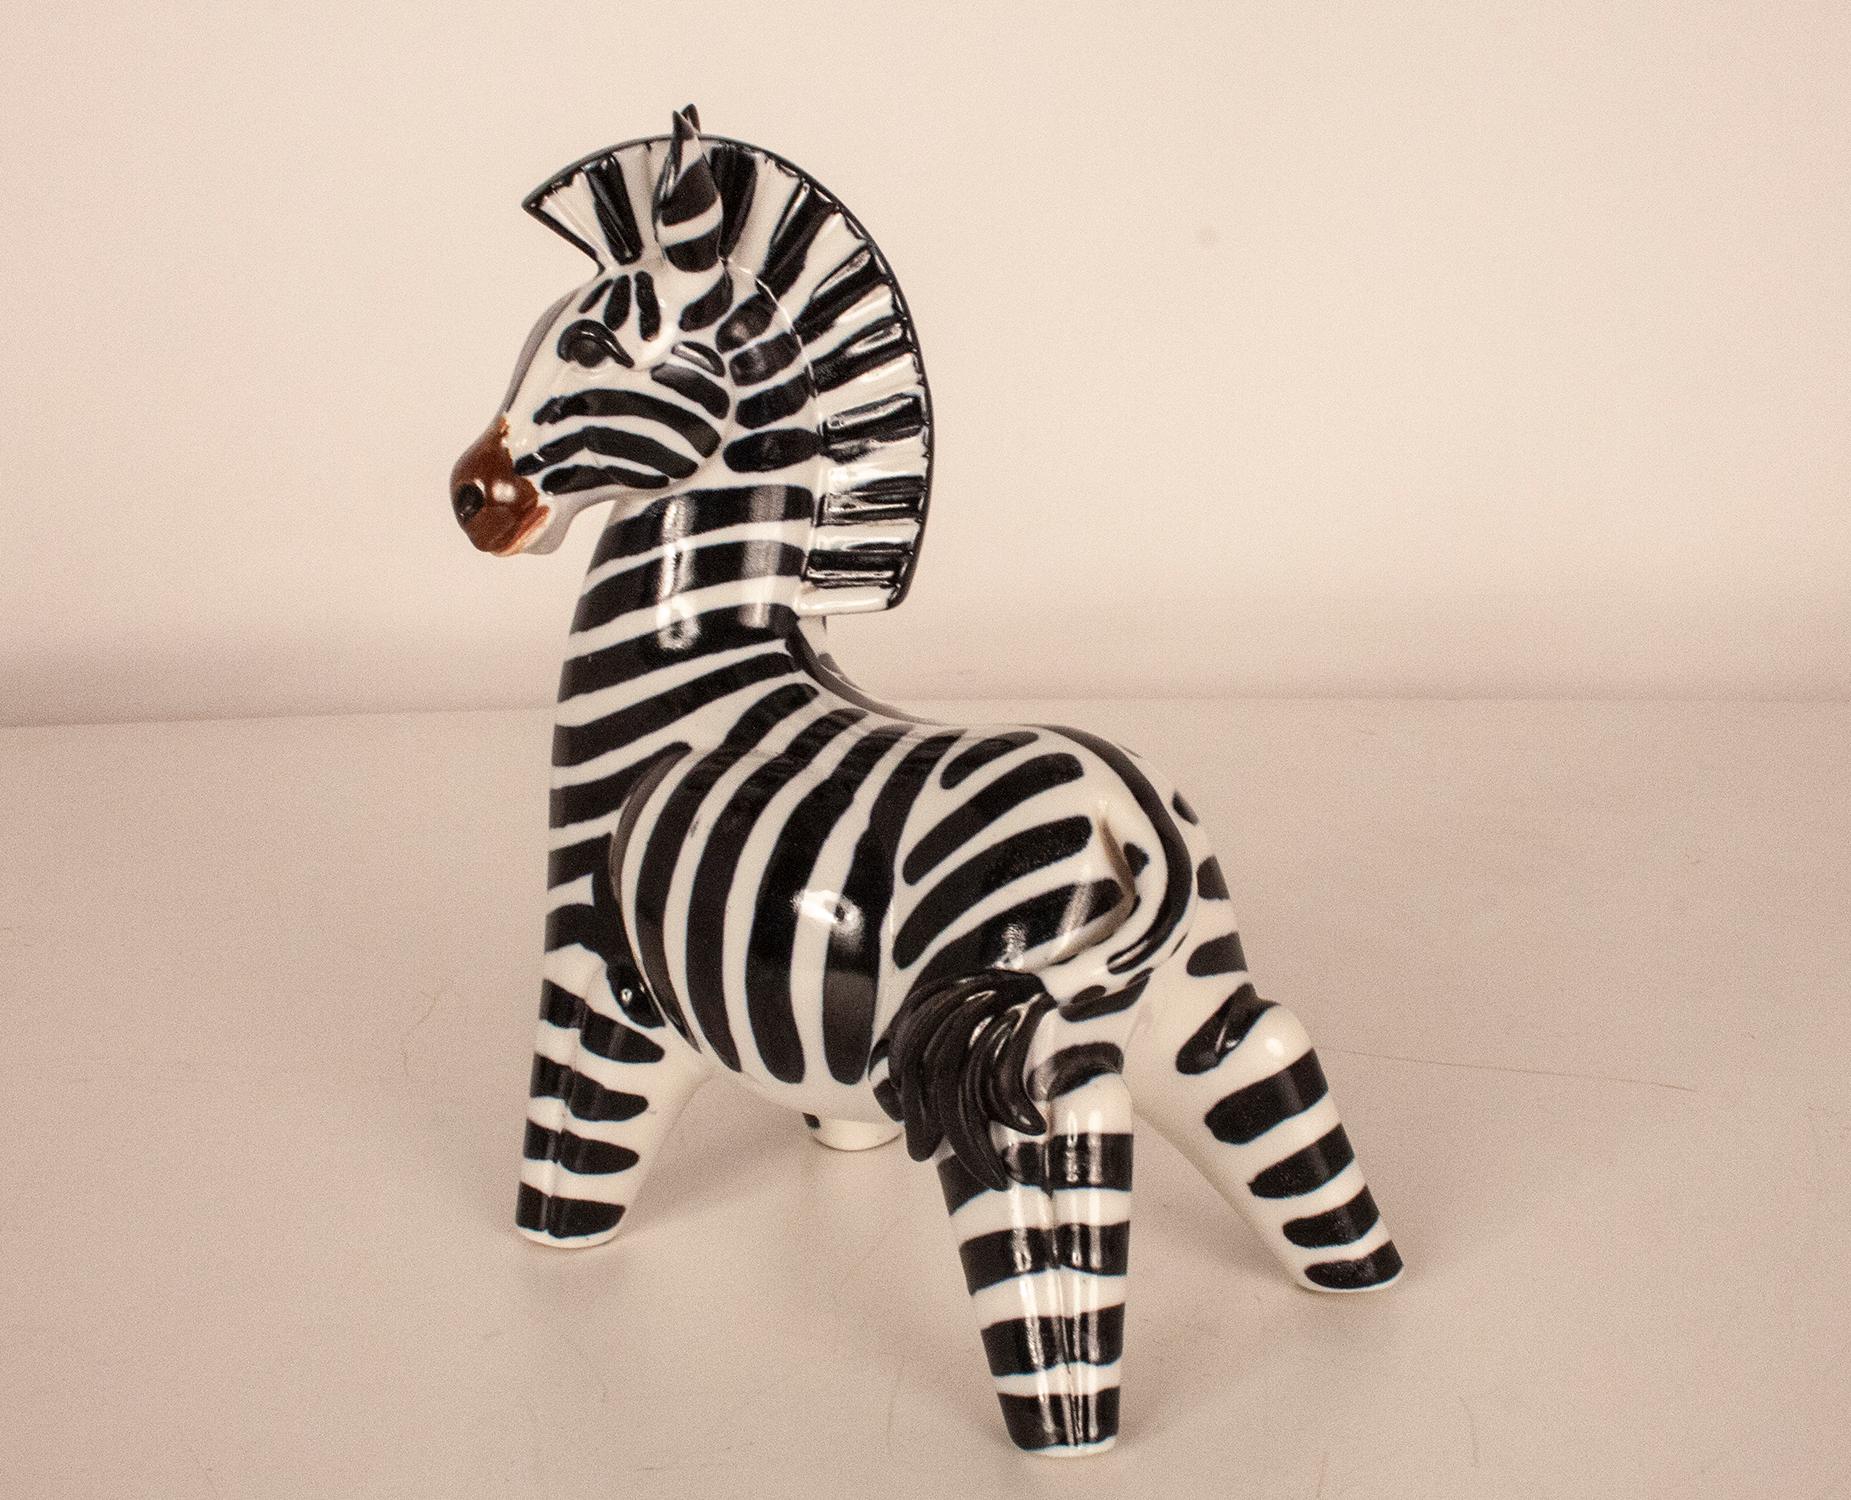 Lovely zebra figure in sargadelos porcelain.
Spain 1970's.